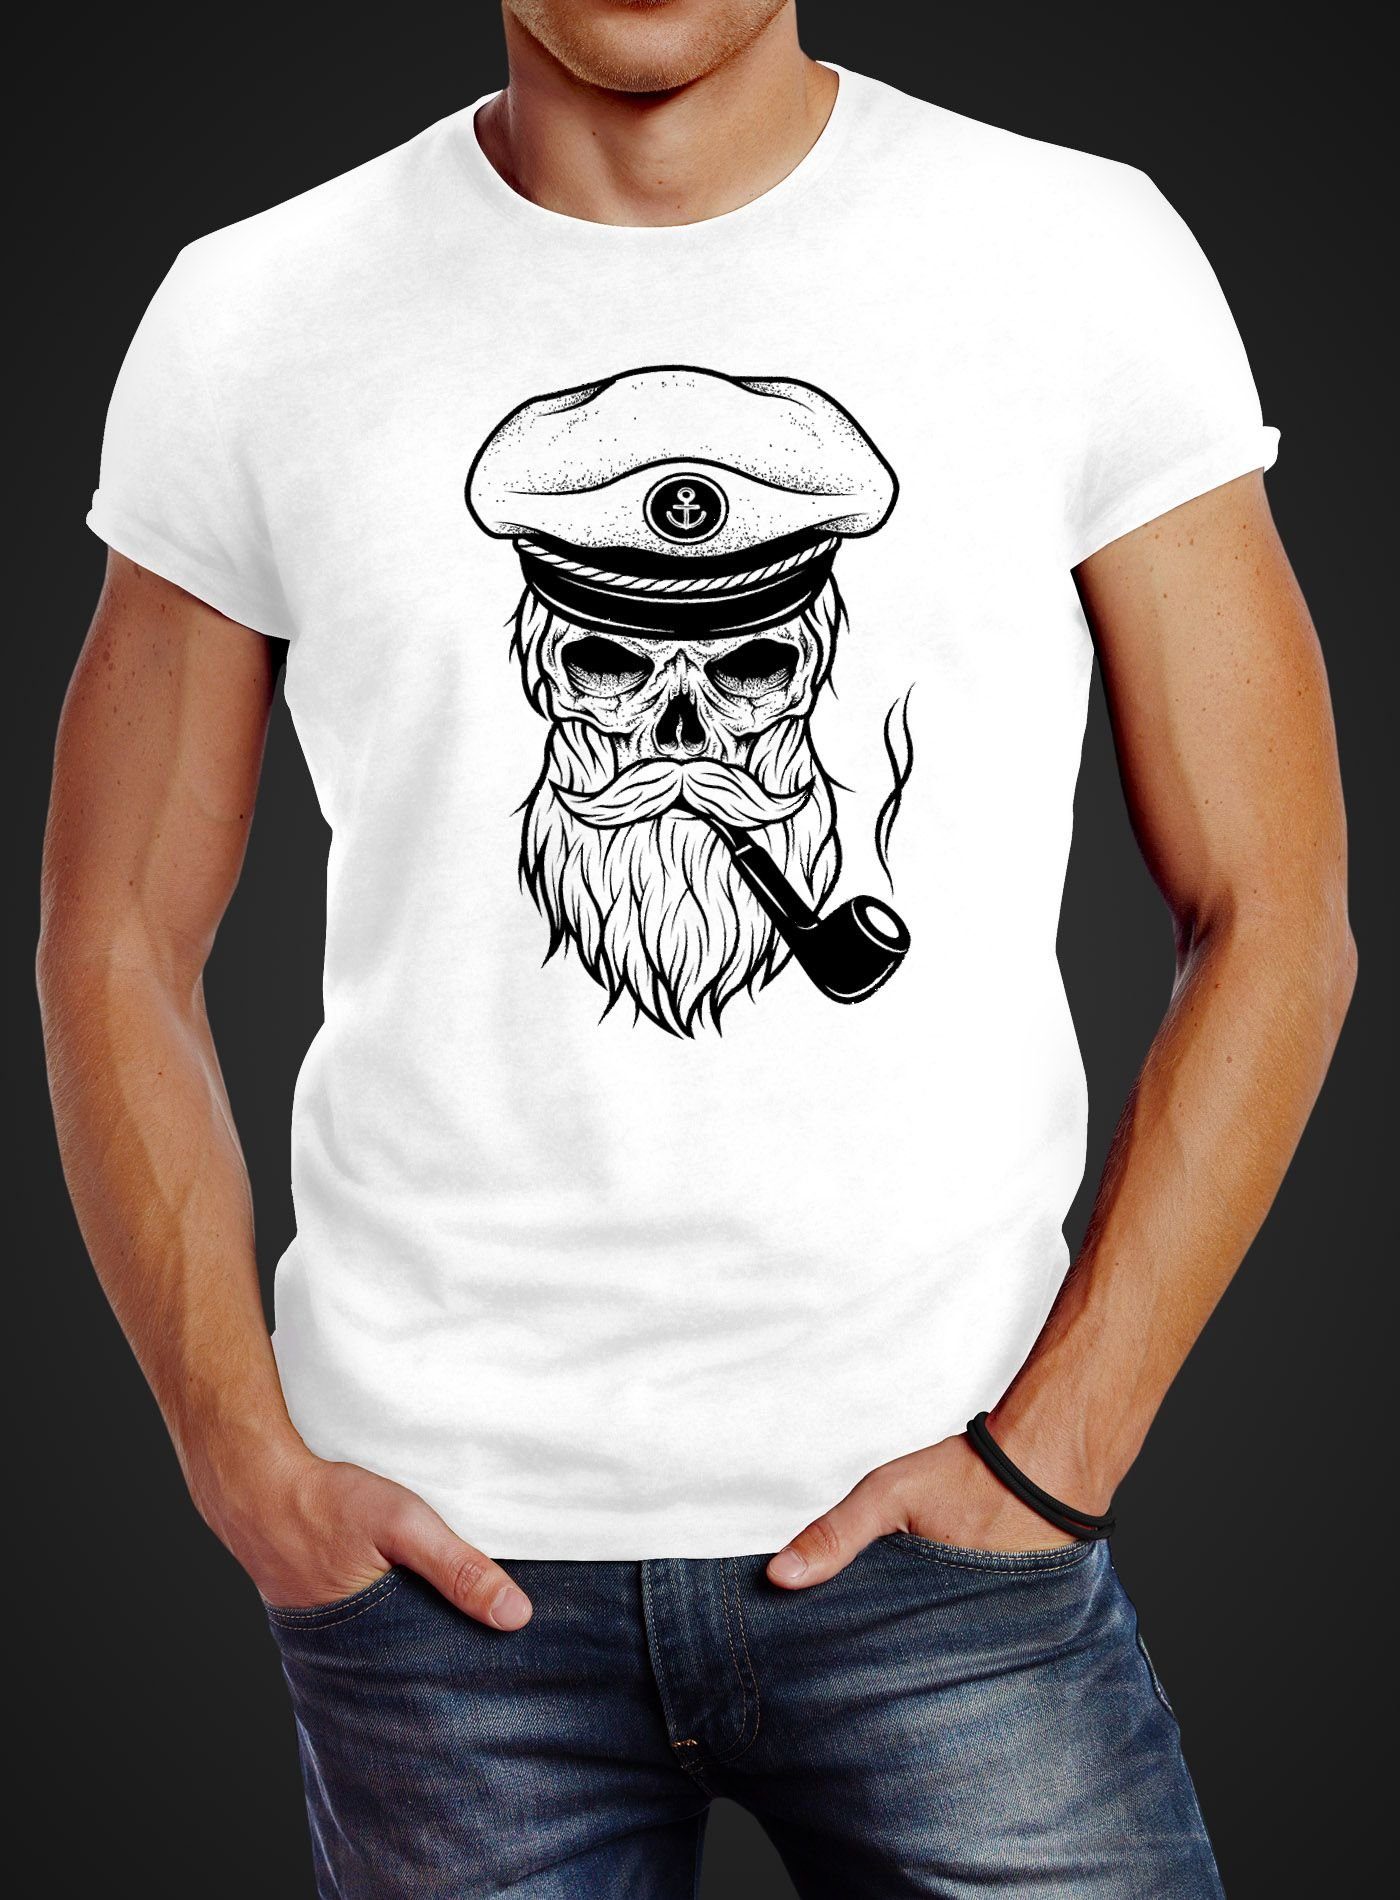 Slim Neverless Captain Print Hipster mit Neverless® Fit T-Shirt Herren Skull Totenkopf Kapitän Print-Shirt weiß